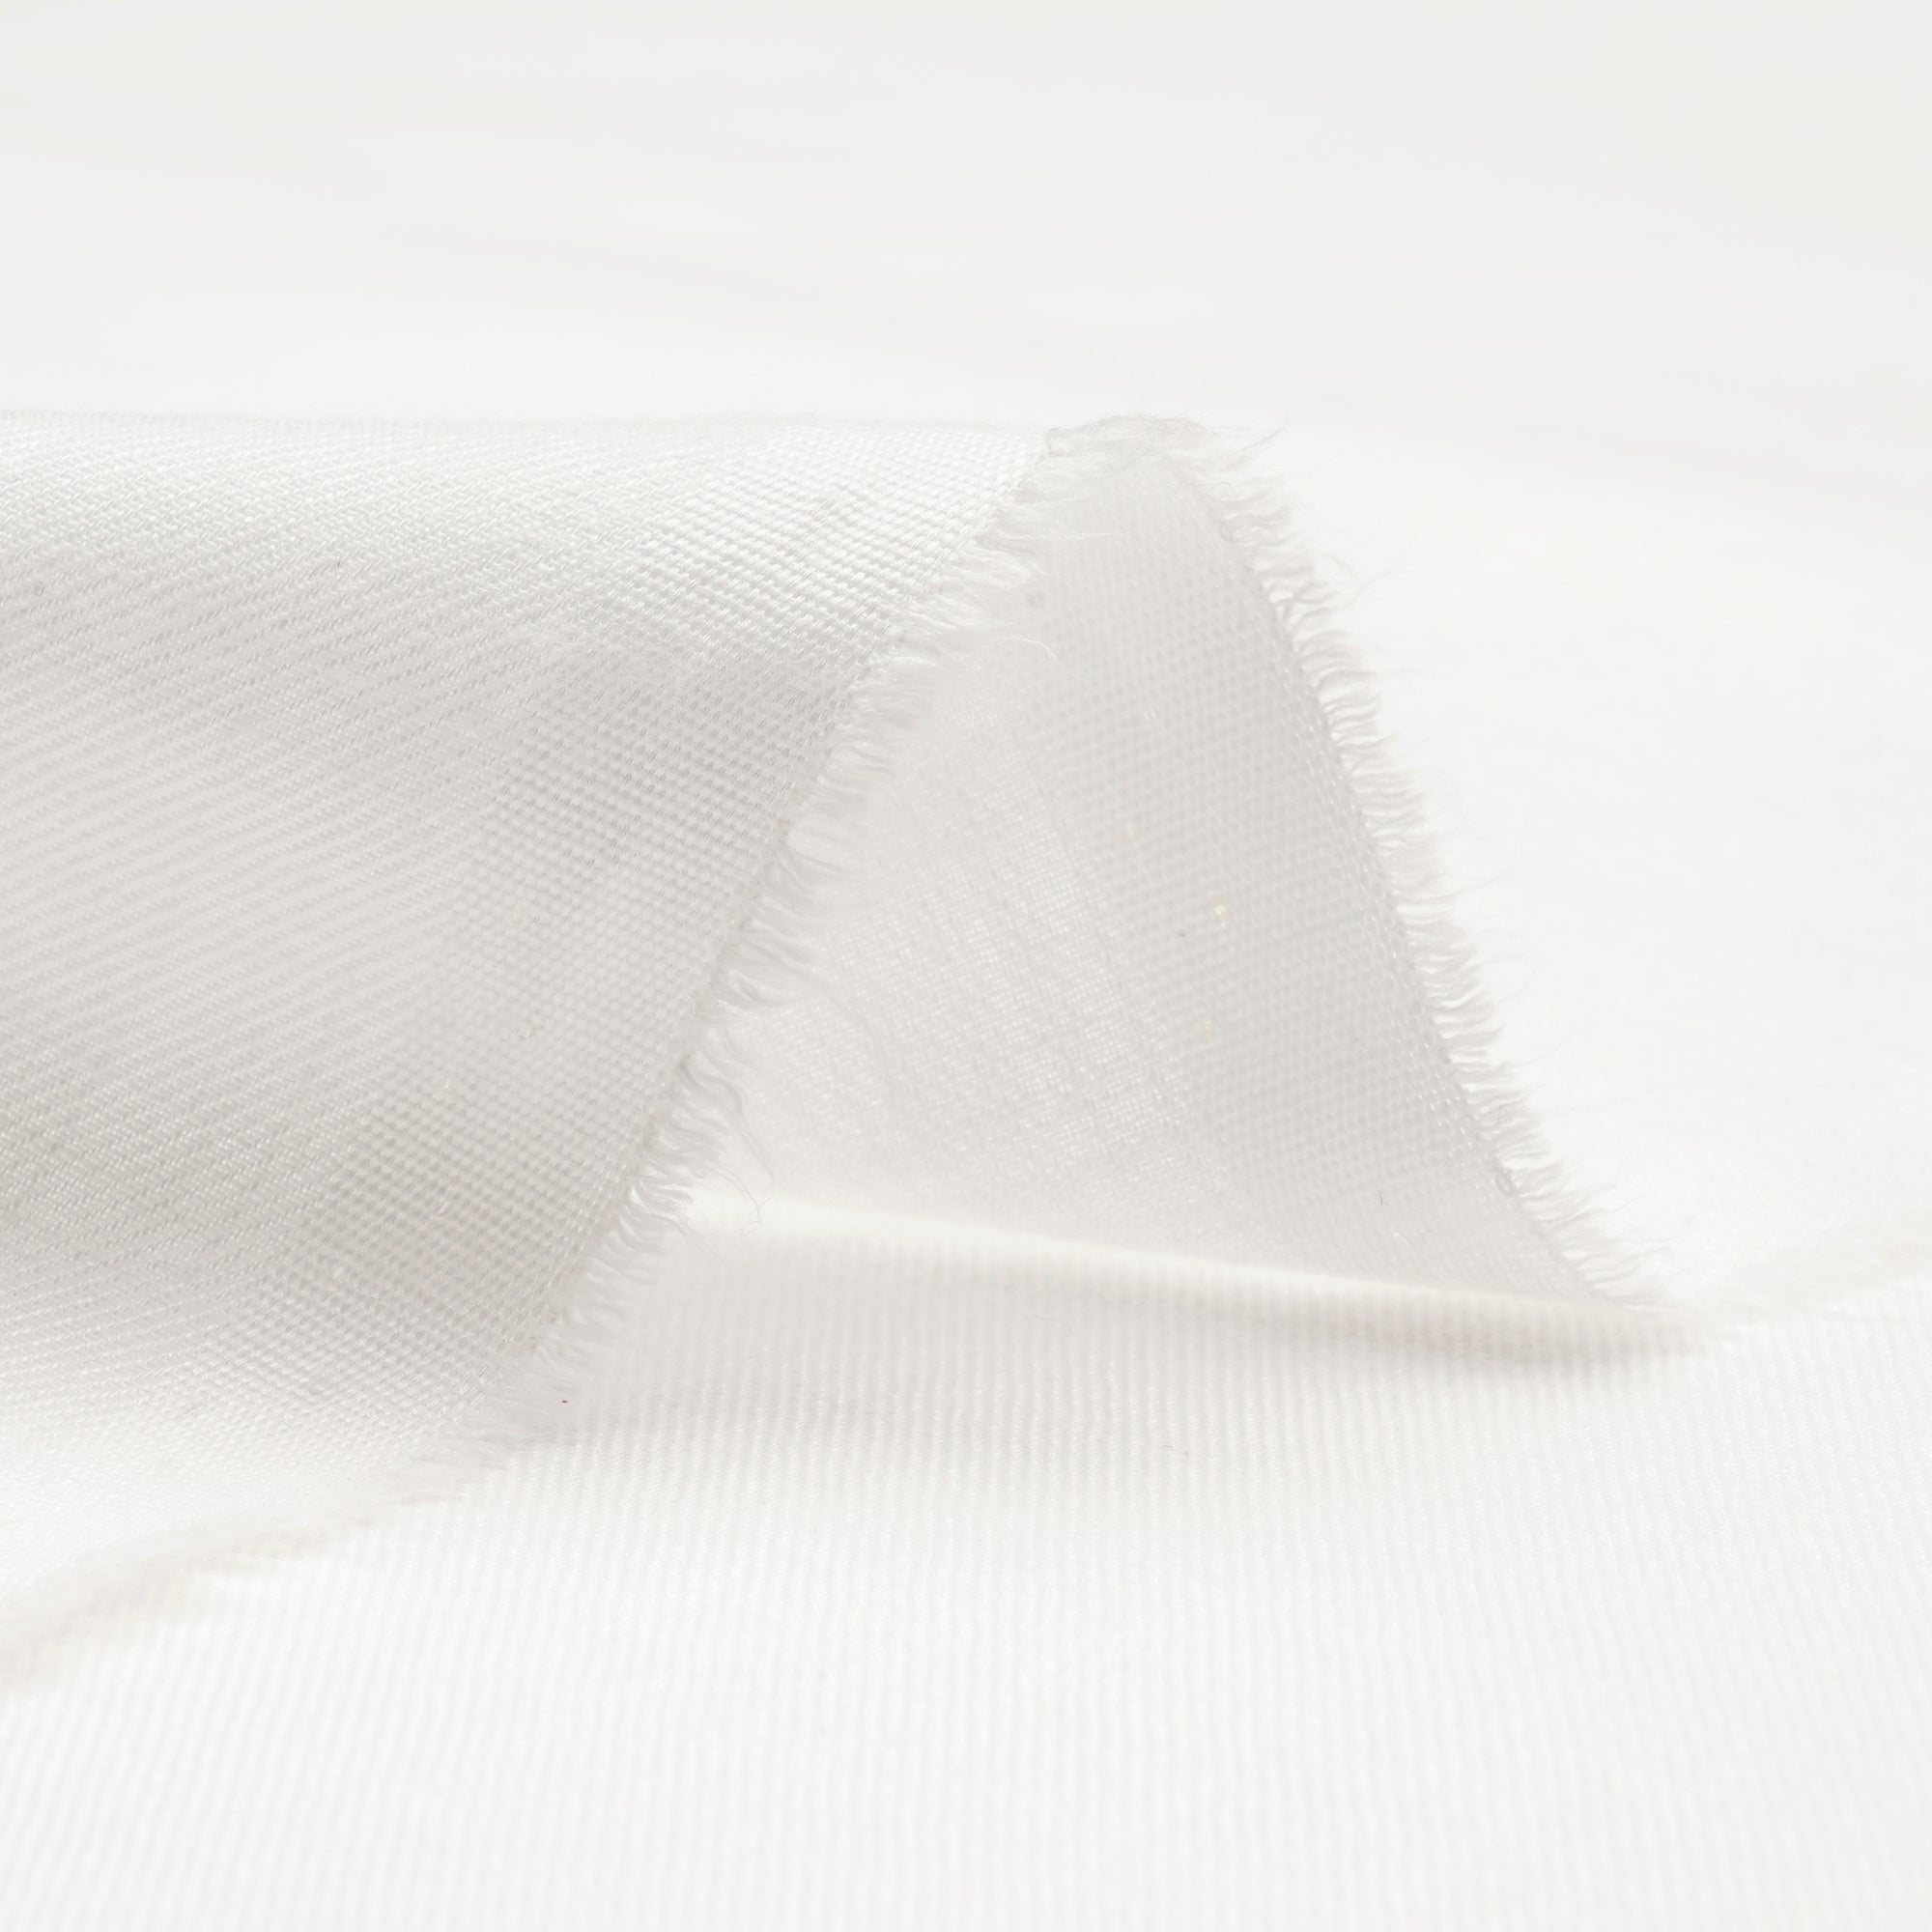 White Plain Slub Fancy Polyester Fabric